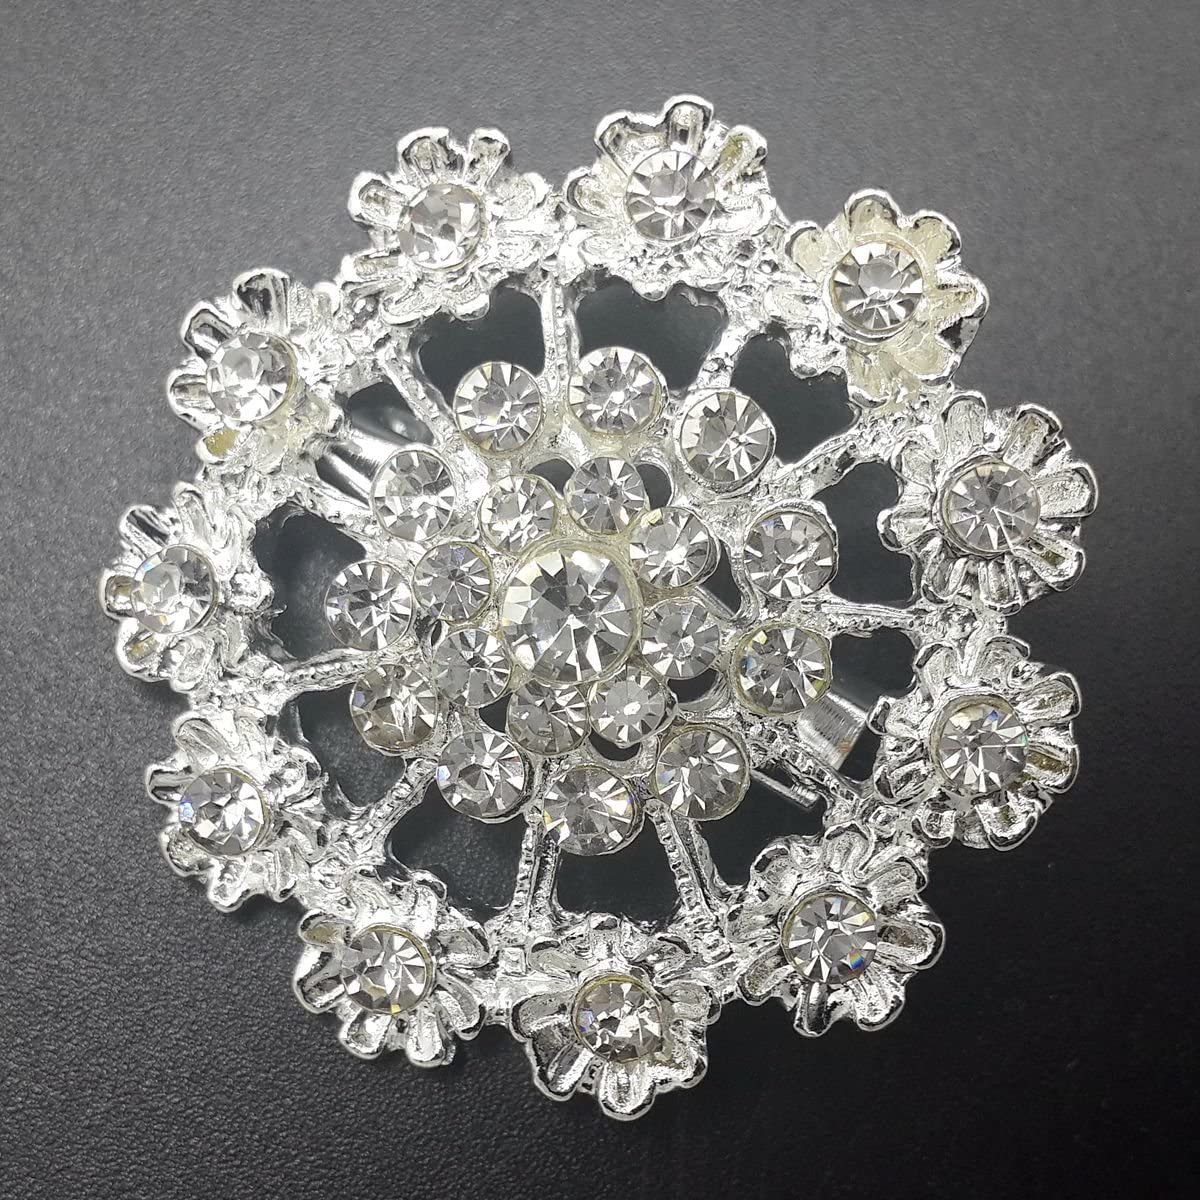 Lot 12pc Clear Rhinestone Crystal Flower Brooches Pins DIY Wedding Bouquet Broaches